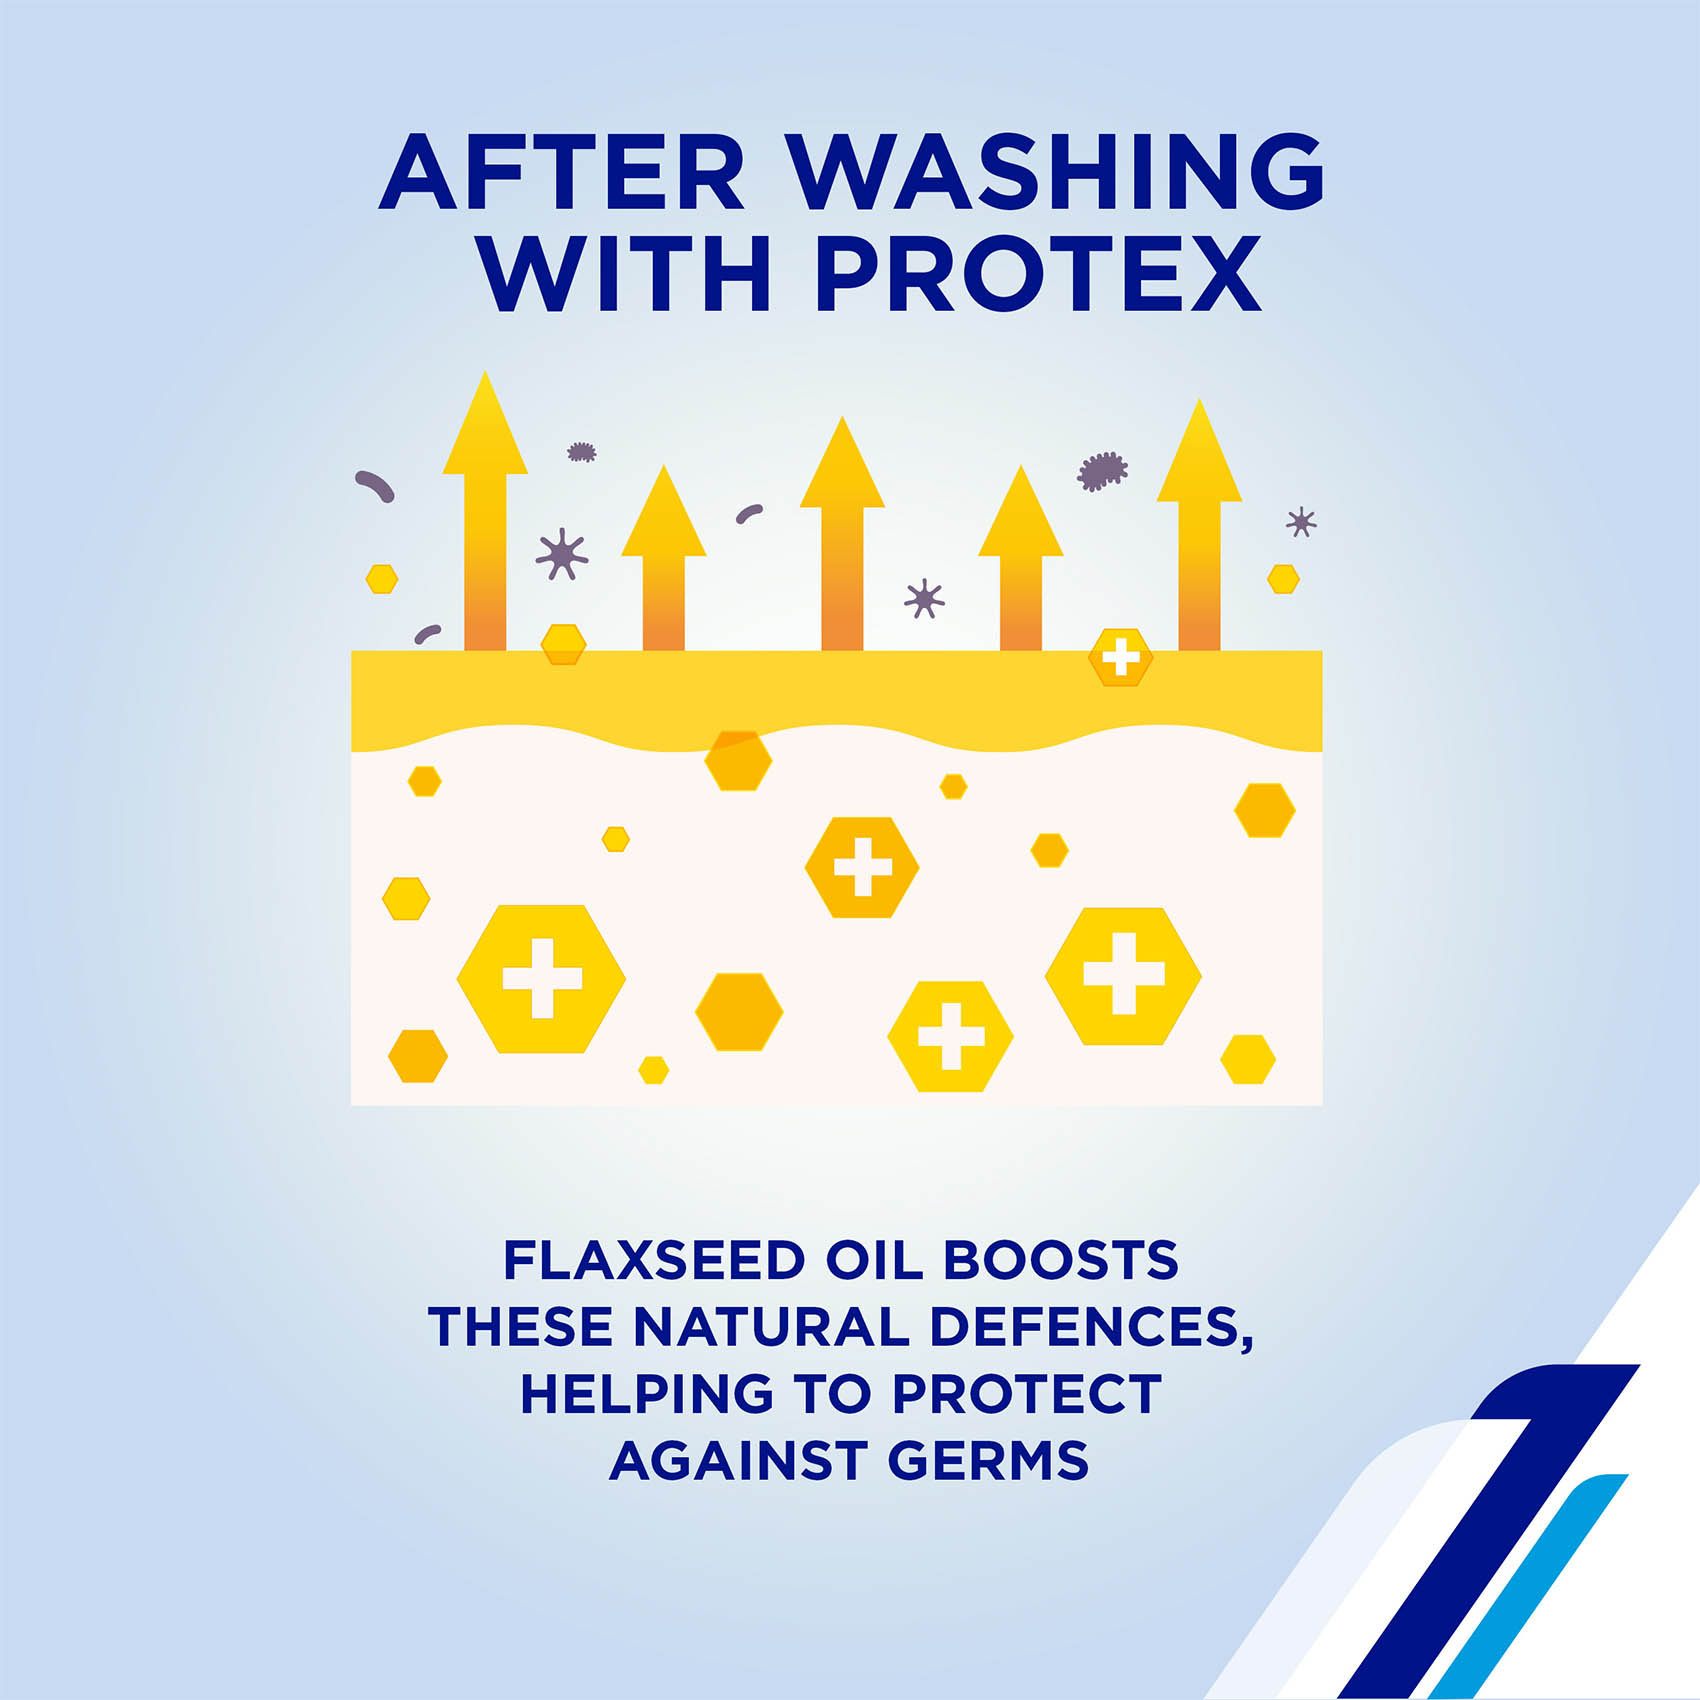 Protex Deep Clean 100g Antibacterial Soap